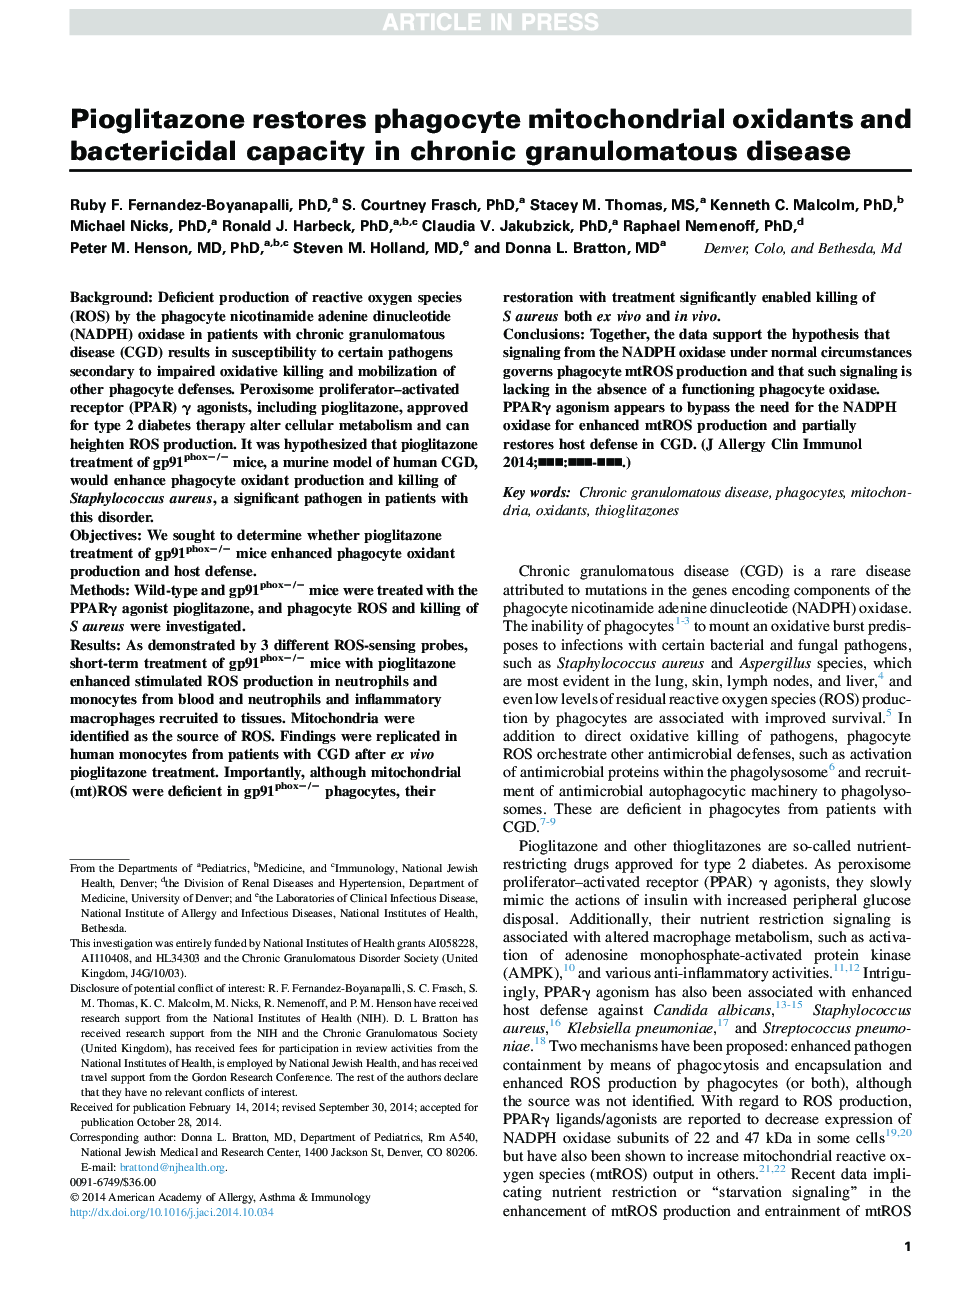 Pioglitazone restores phagocyte mitochondrial oxidants and bactericidal capacity in chronic granulomatous disease